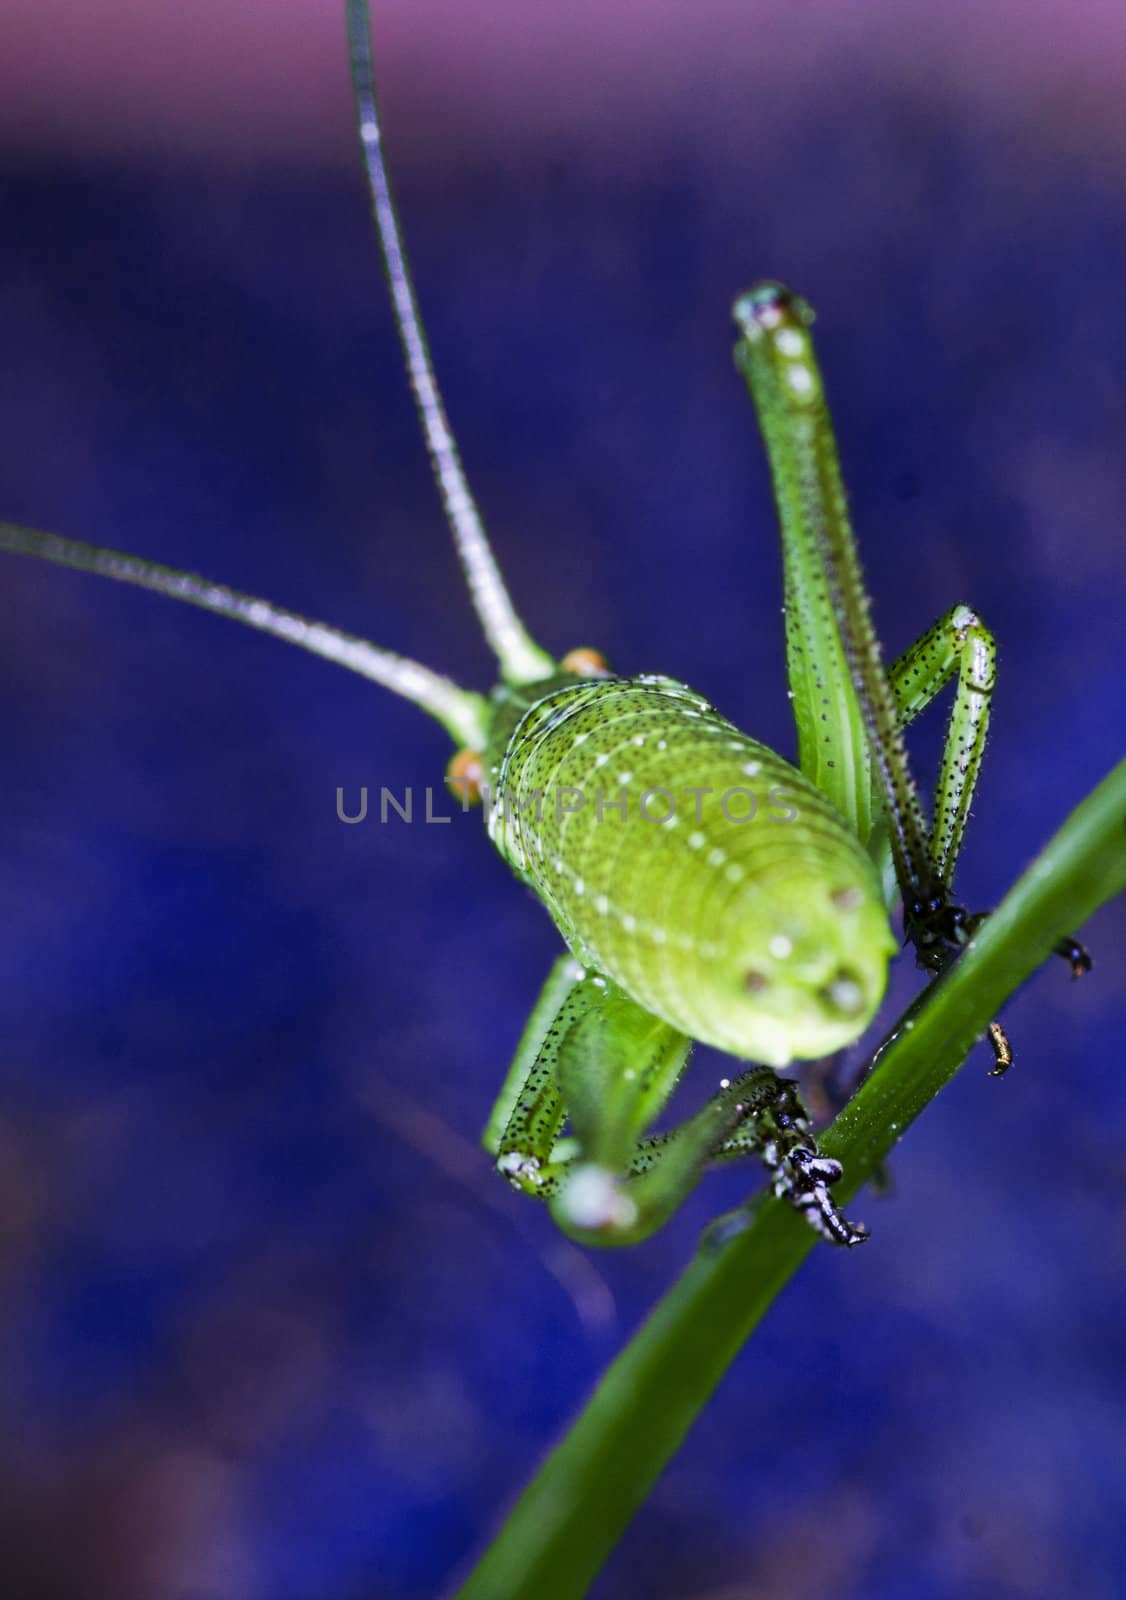 Grasshopper on blue background by chuckyq1